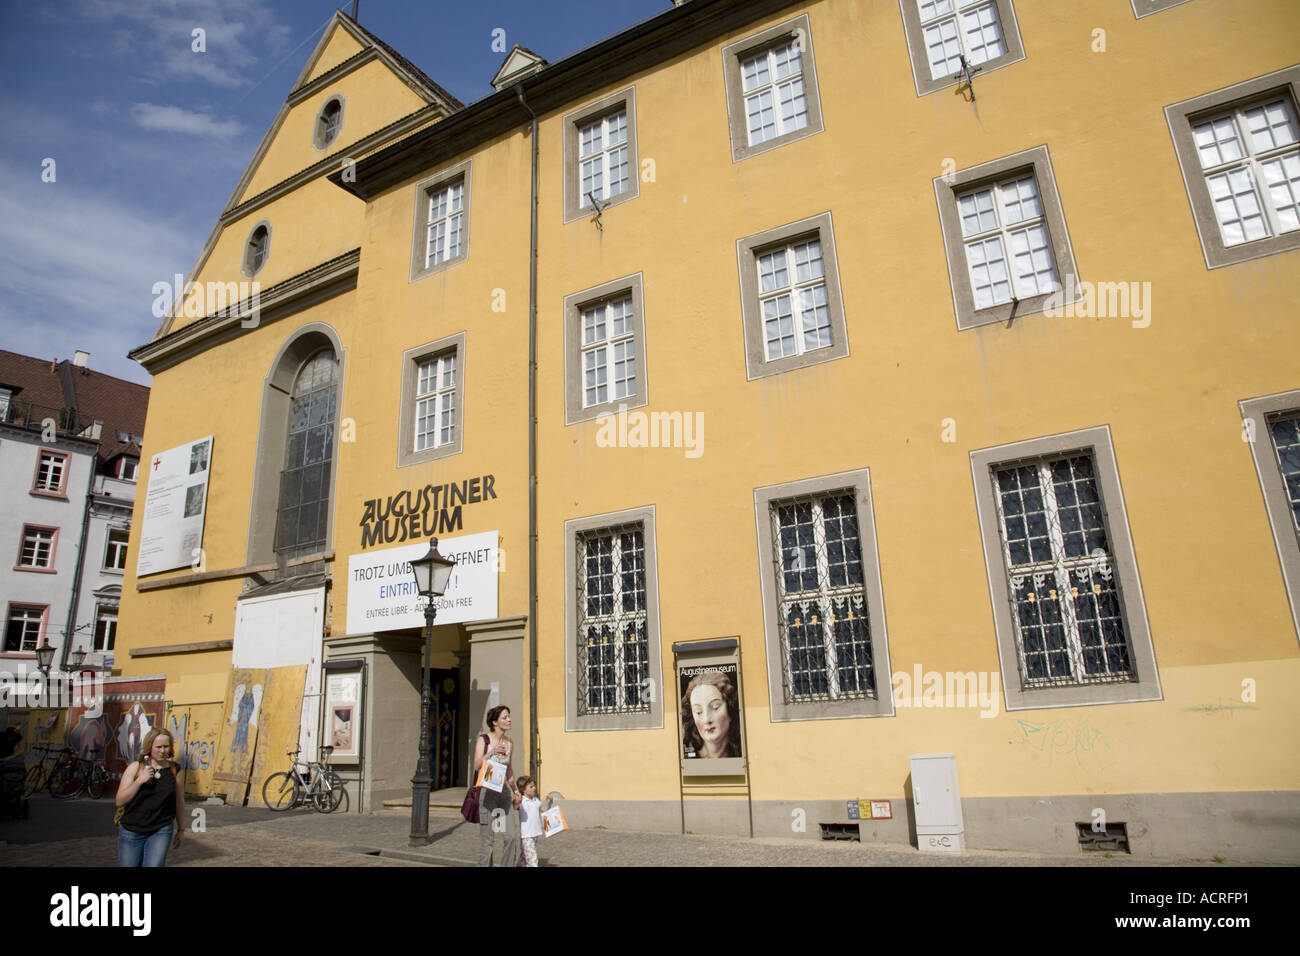 Augustiner Museum, Freiburg, Germany Stock Photo